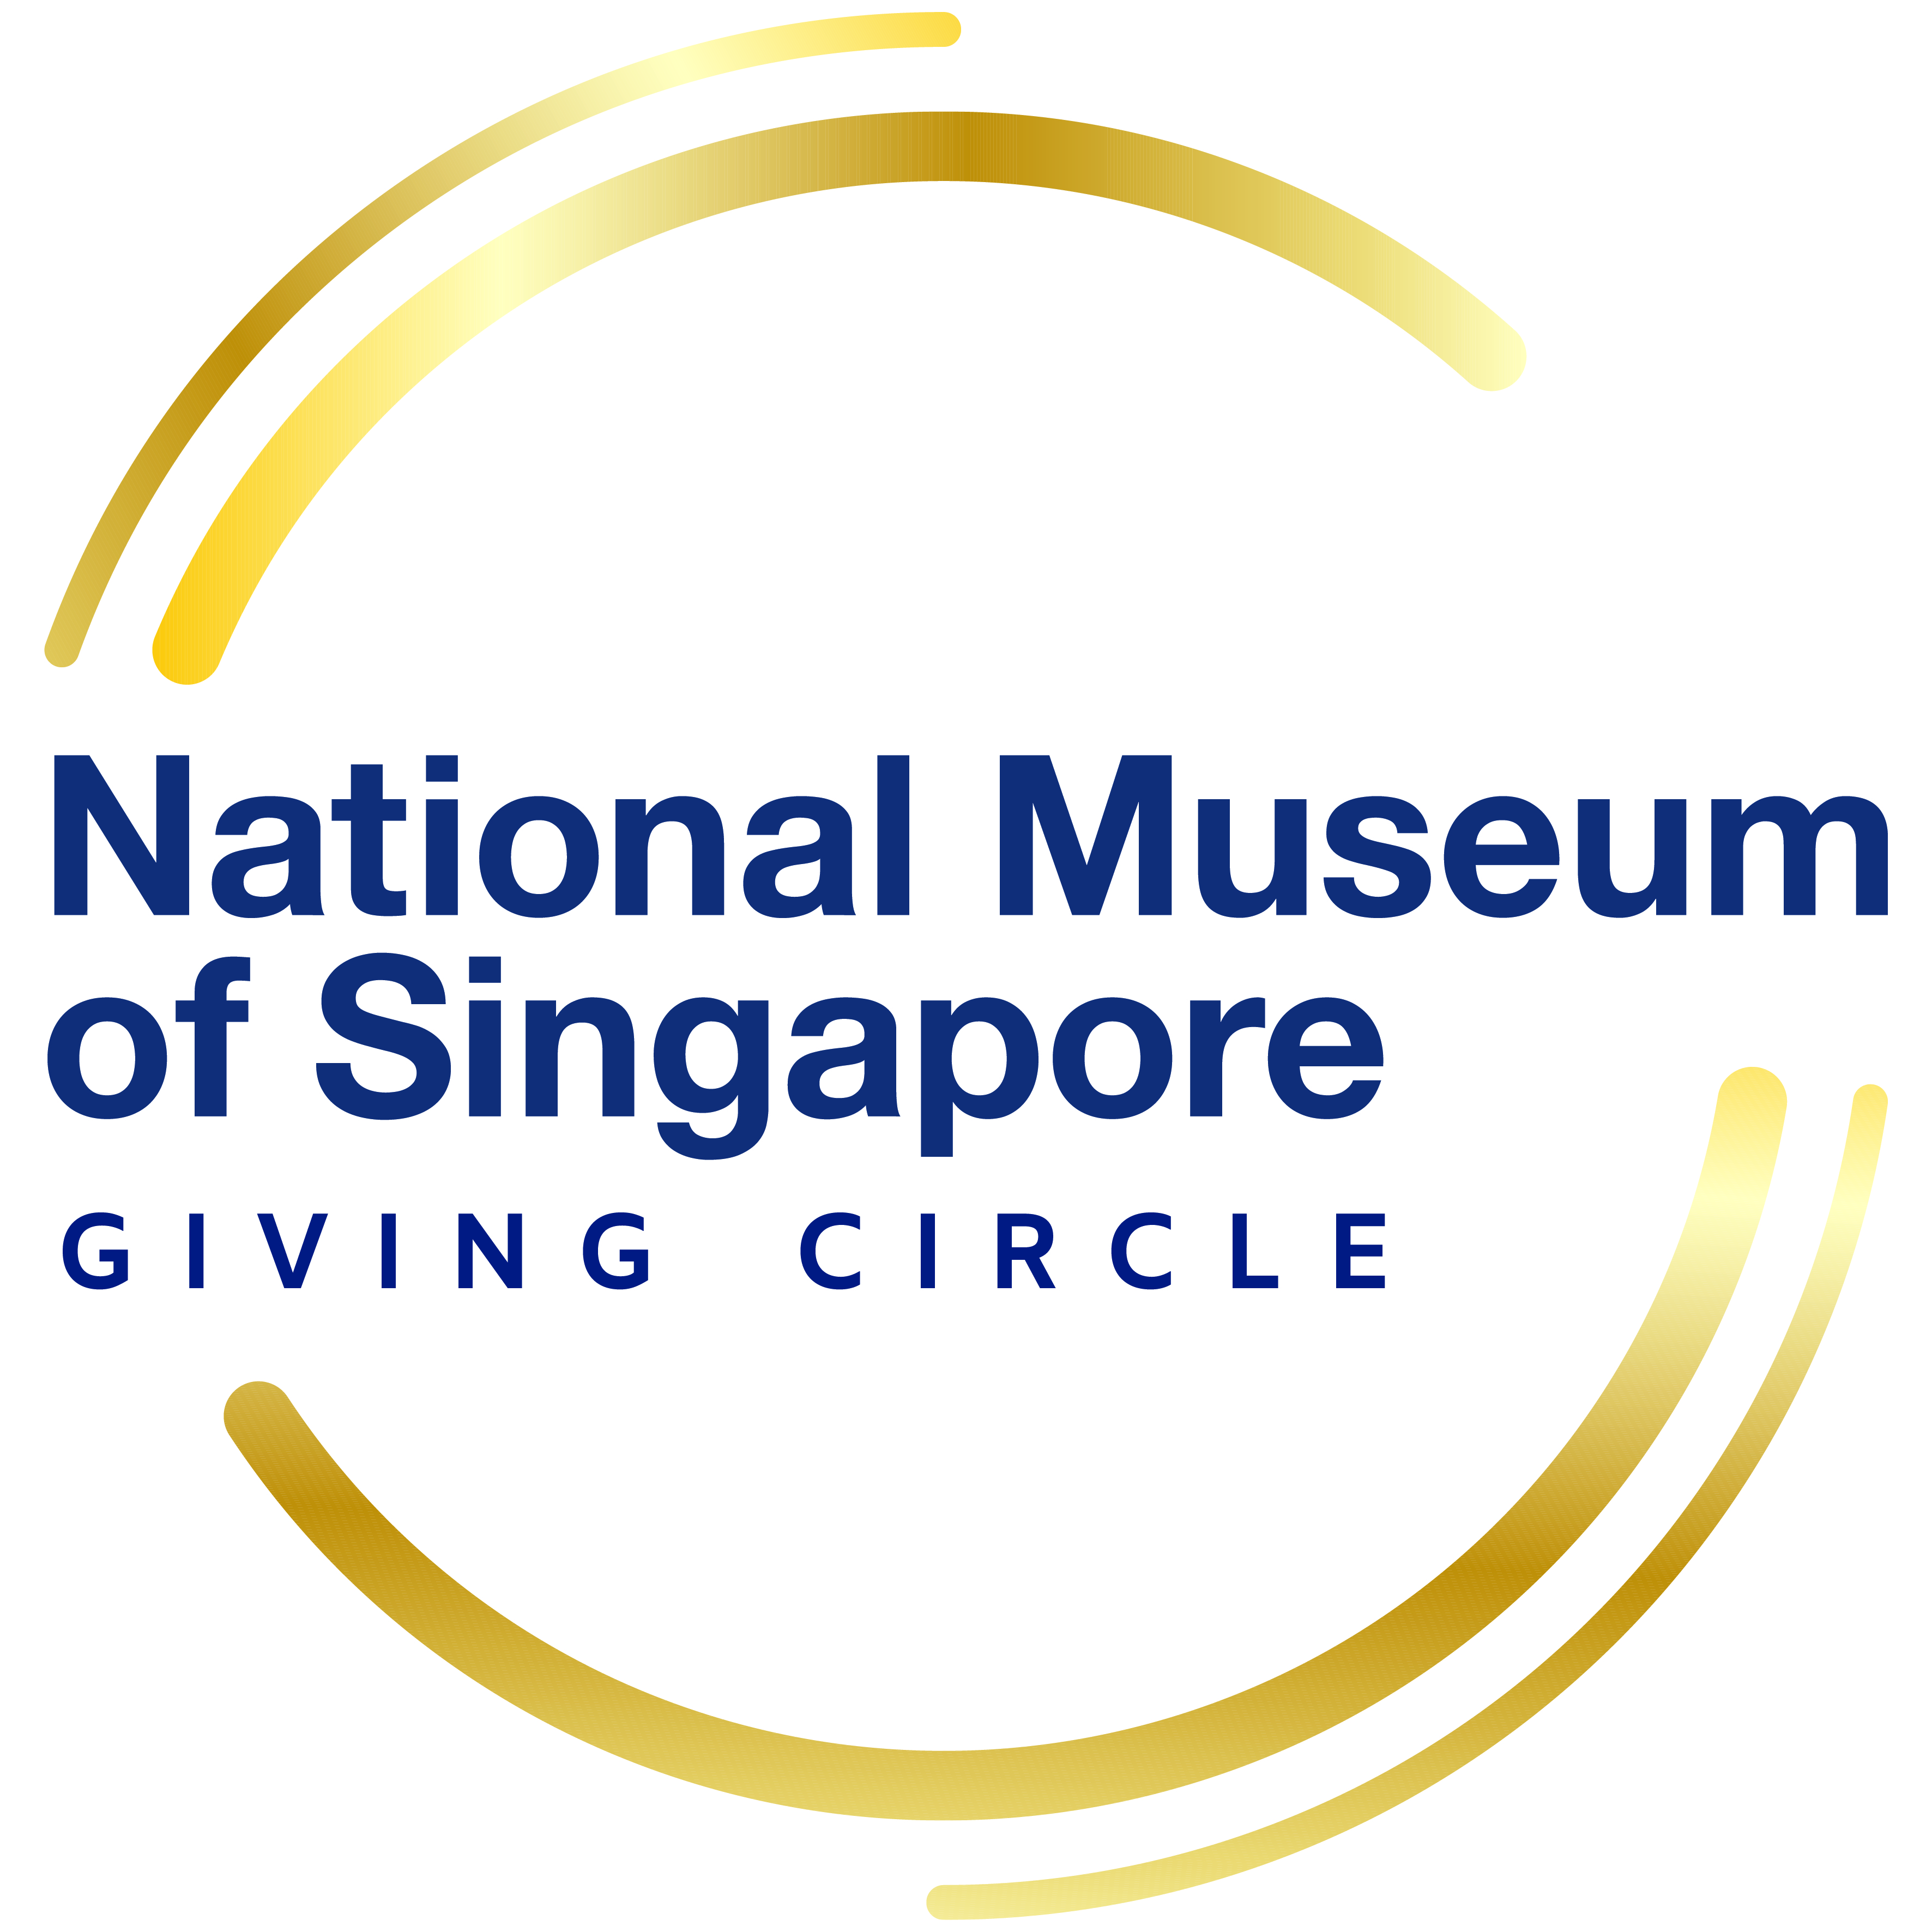 NMS Giving Circle